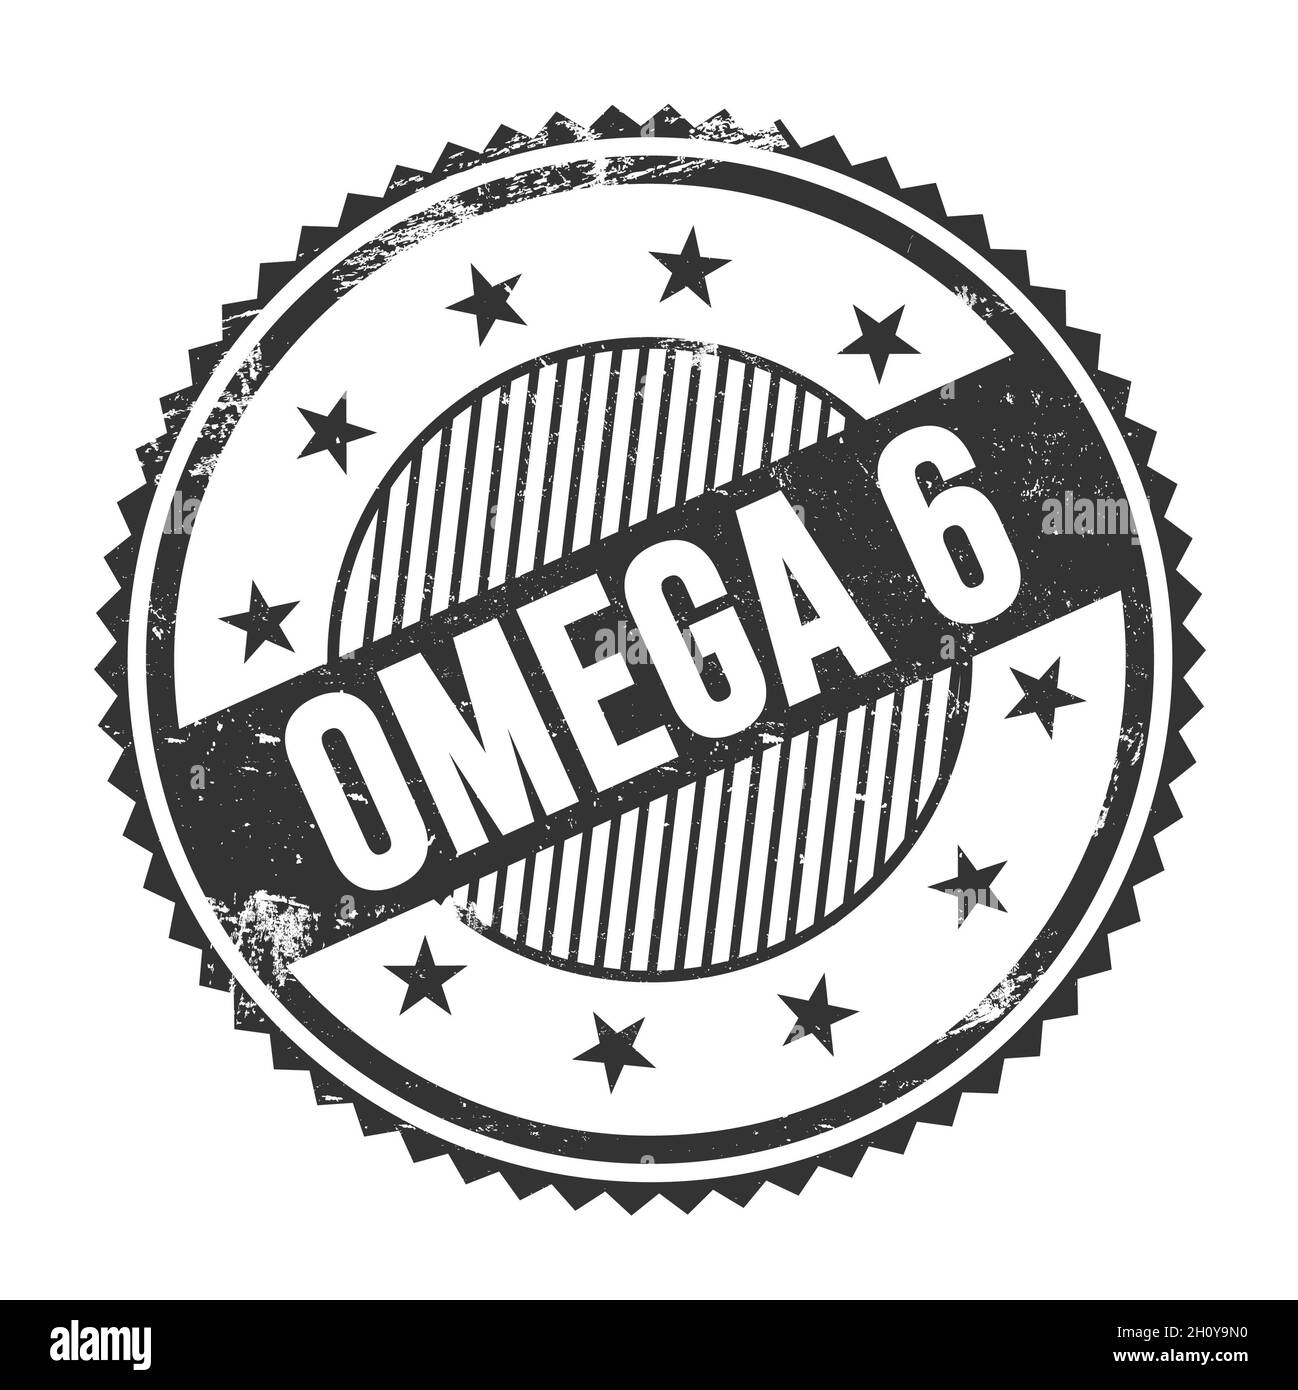 OMEGA 6 text written on black grungy zig zag borders round stamp. Stock Photo